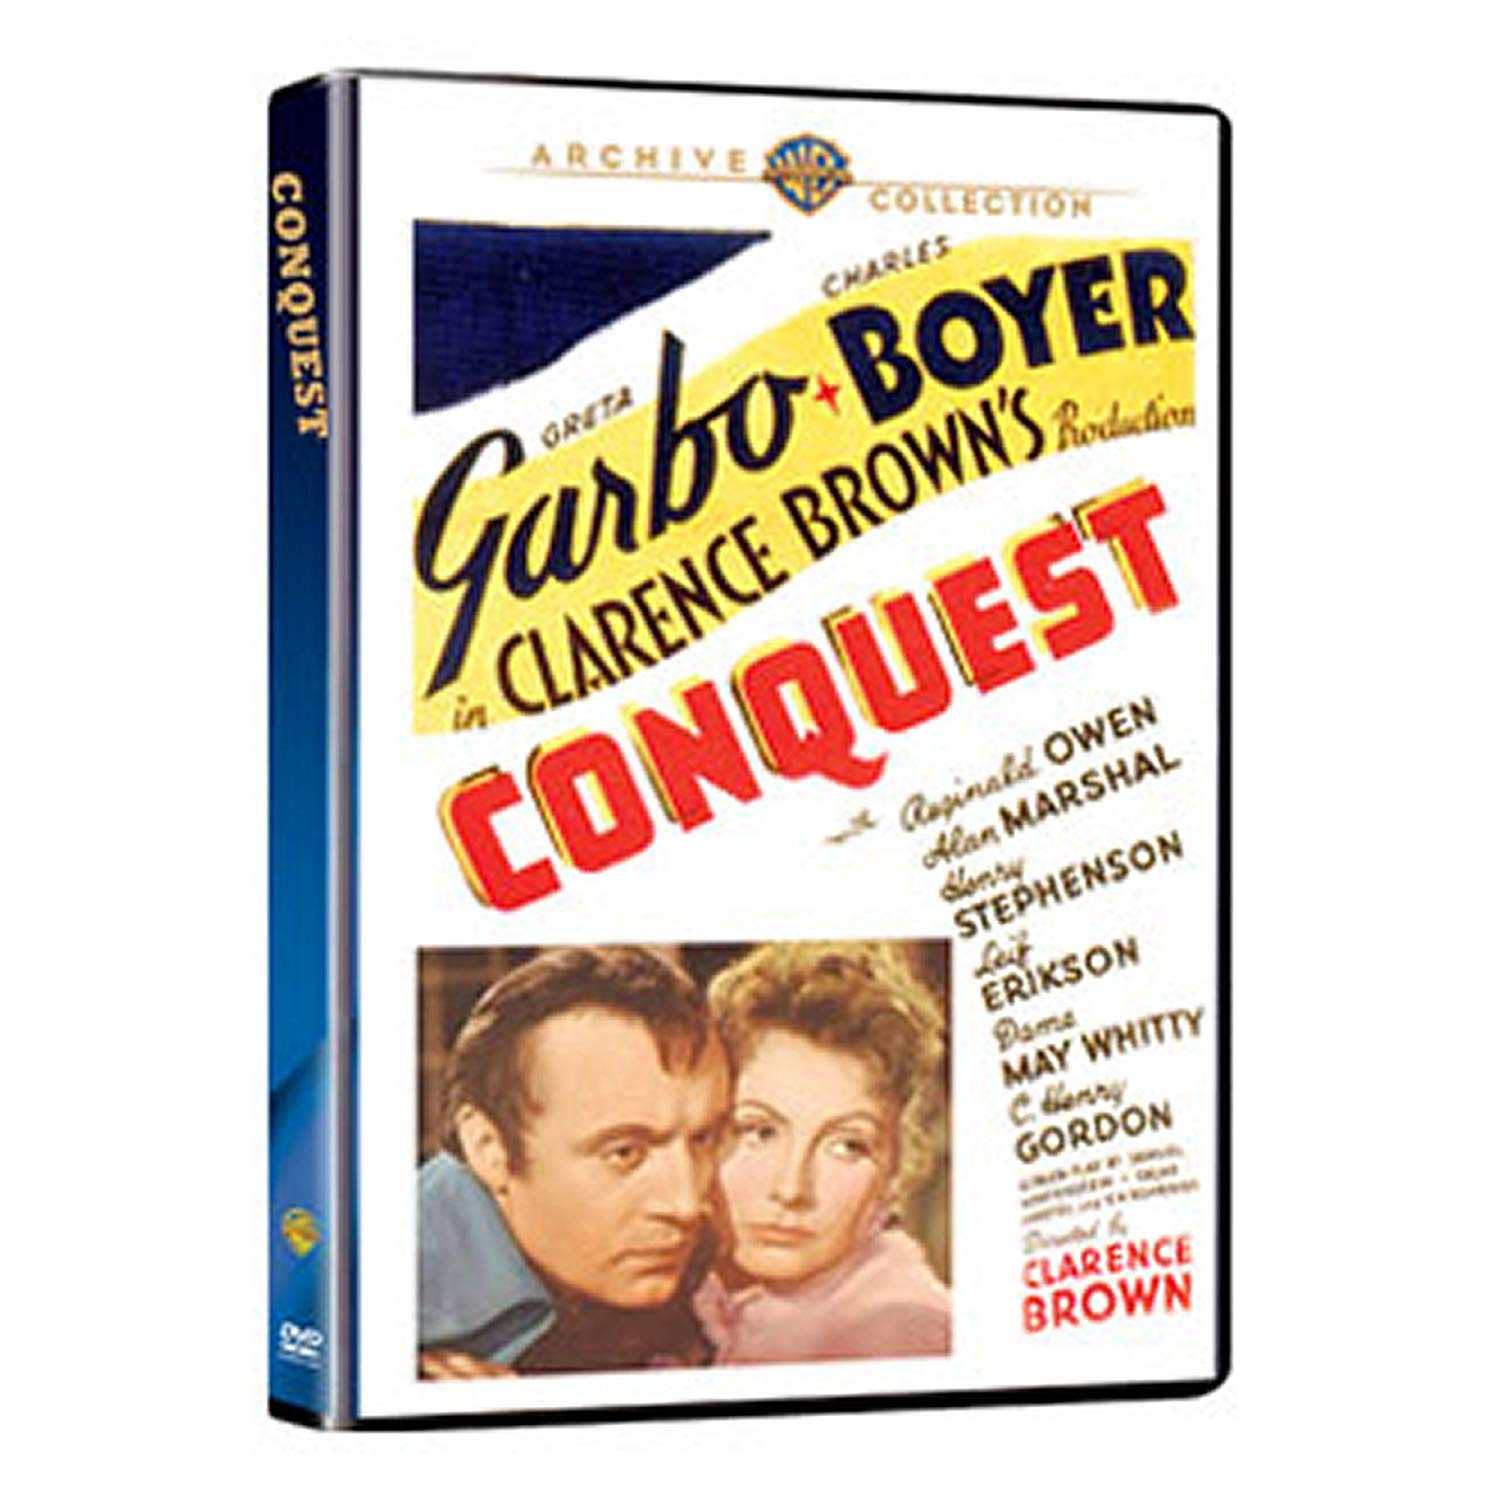 Conquest (1937) starring Charles Boyer, Greta Garbo